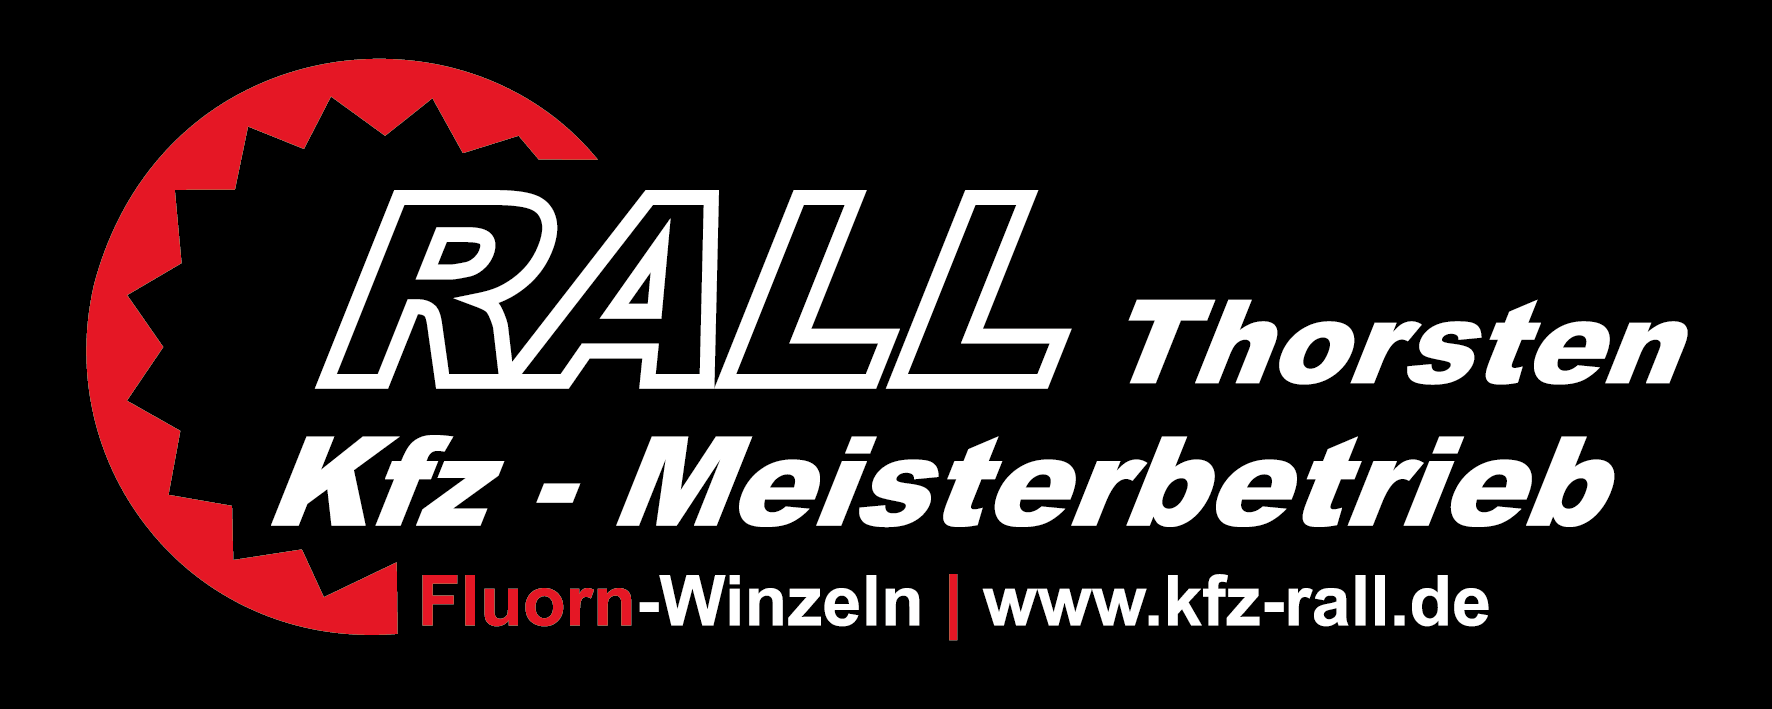 Thorsten Rall KFZ Meisterbetrieb